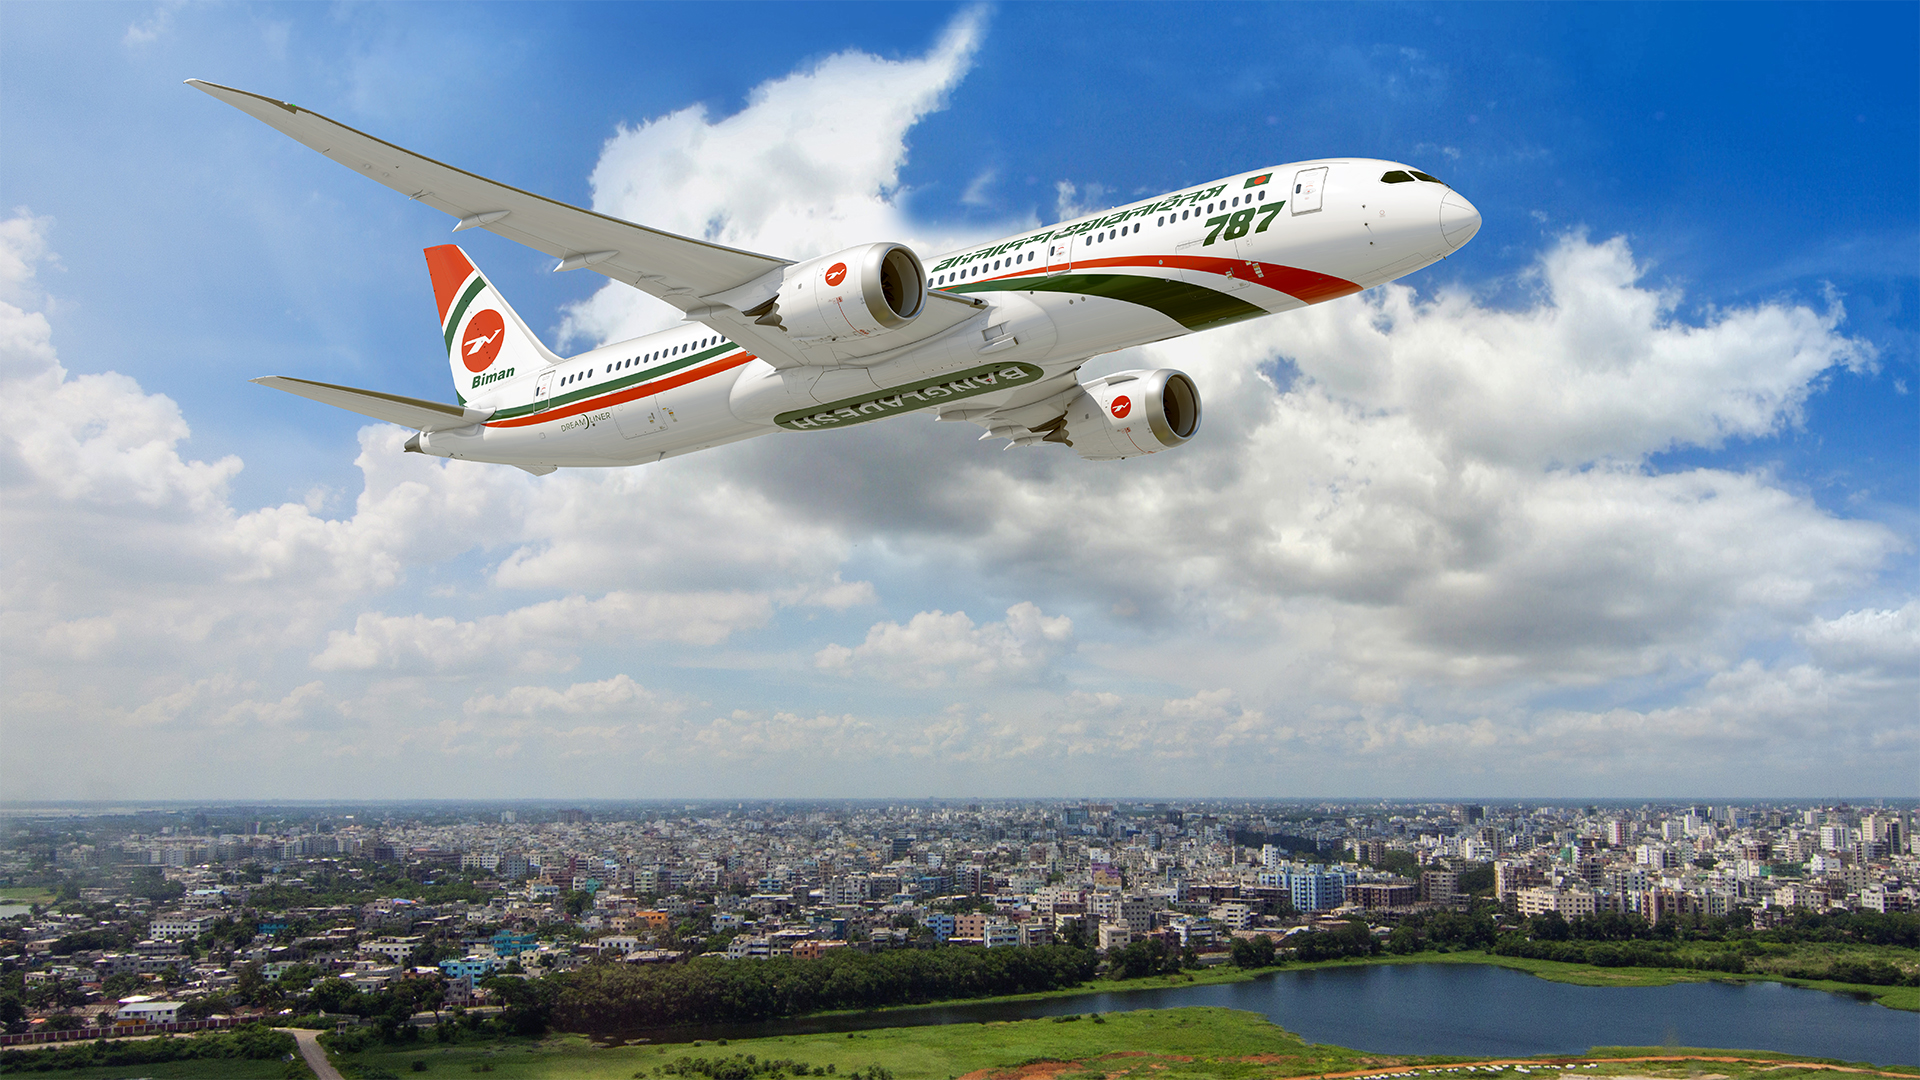 Biman Bangladesh B787 Flew 18 hours on Dhaka-Toronto non-stop Flight